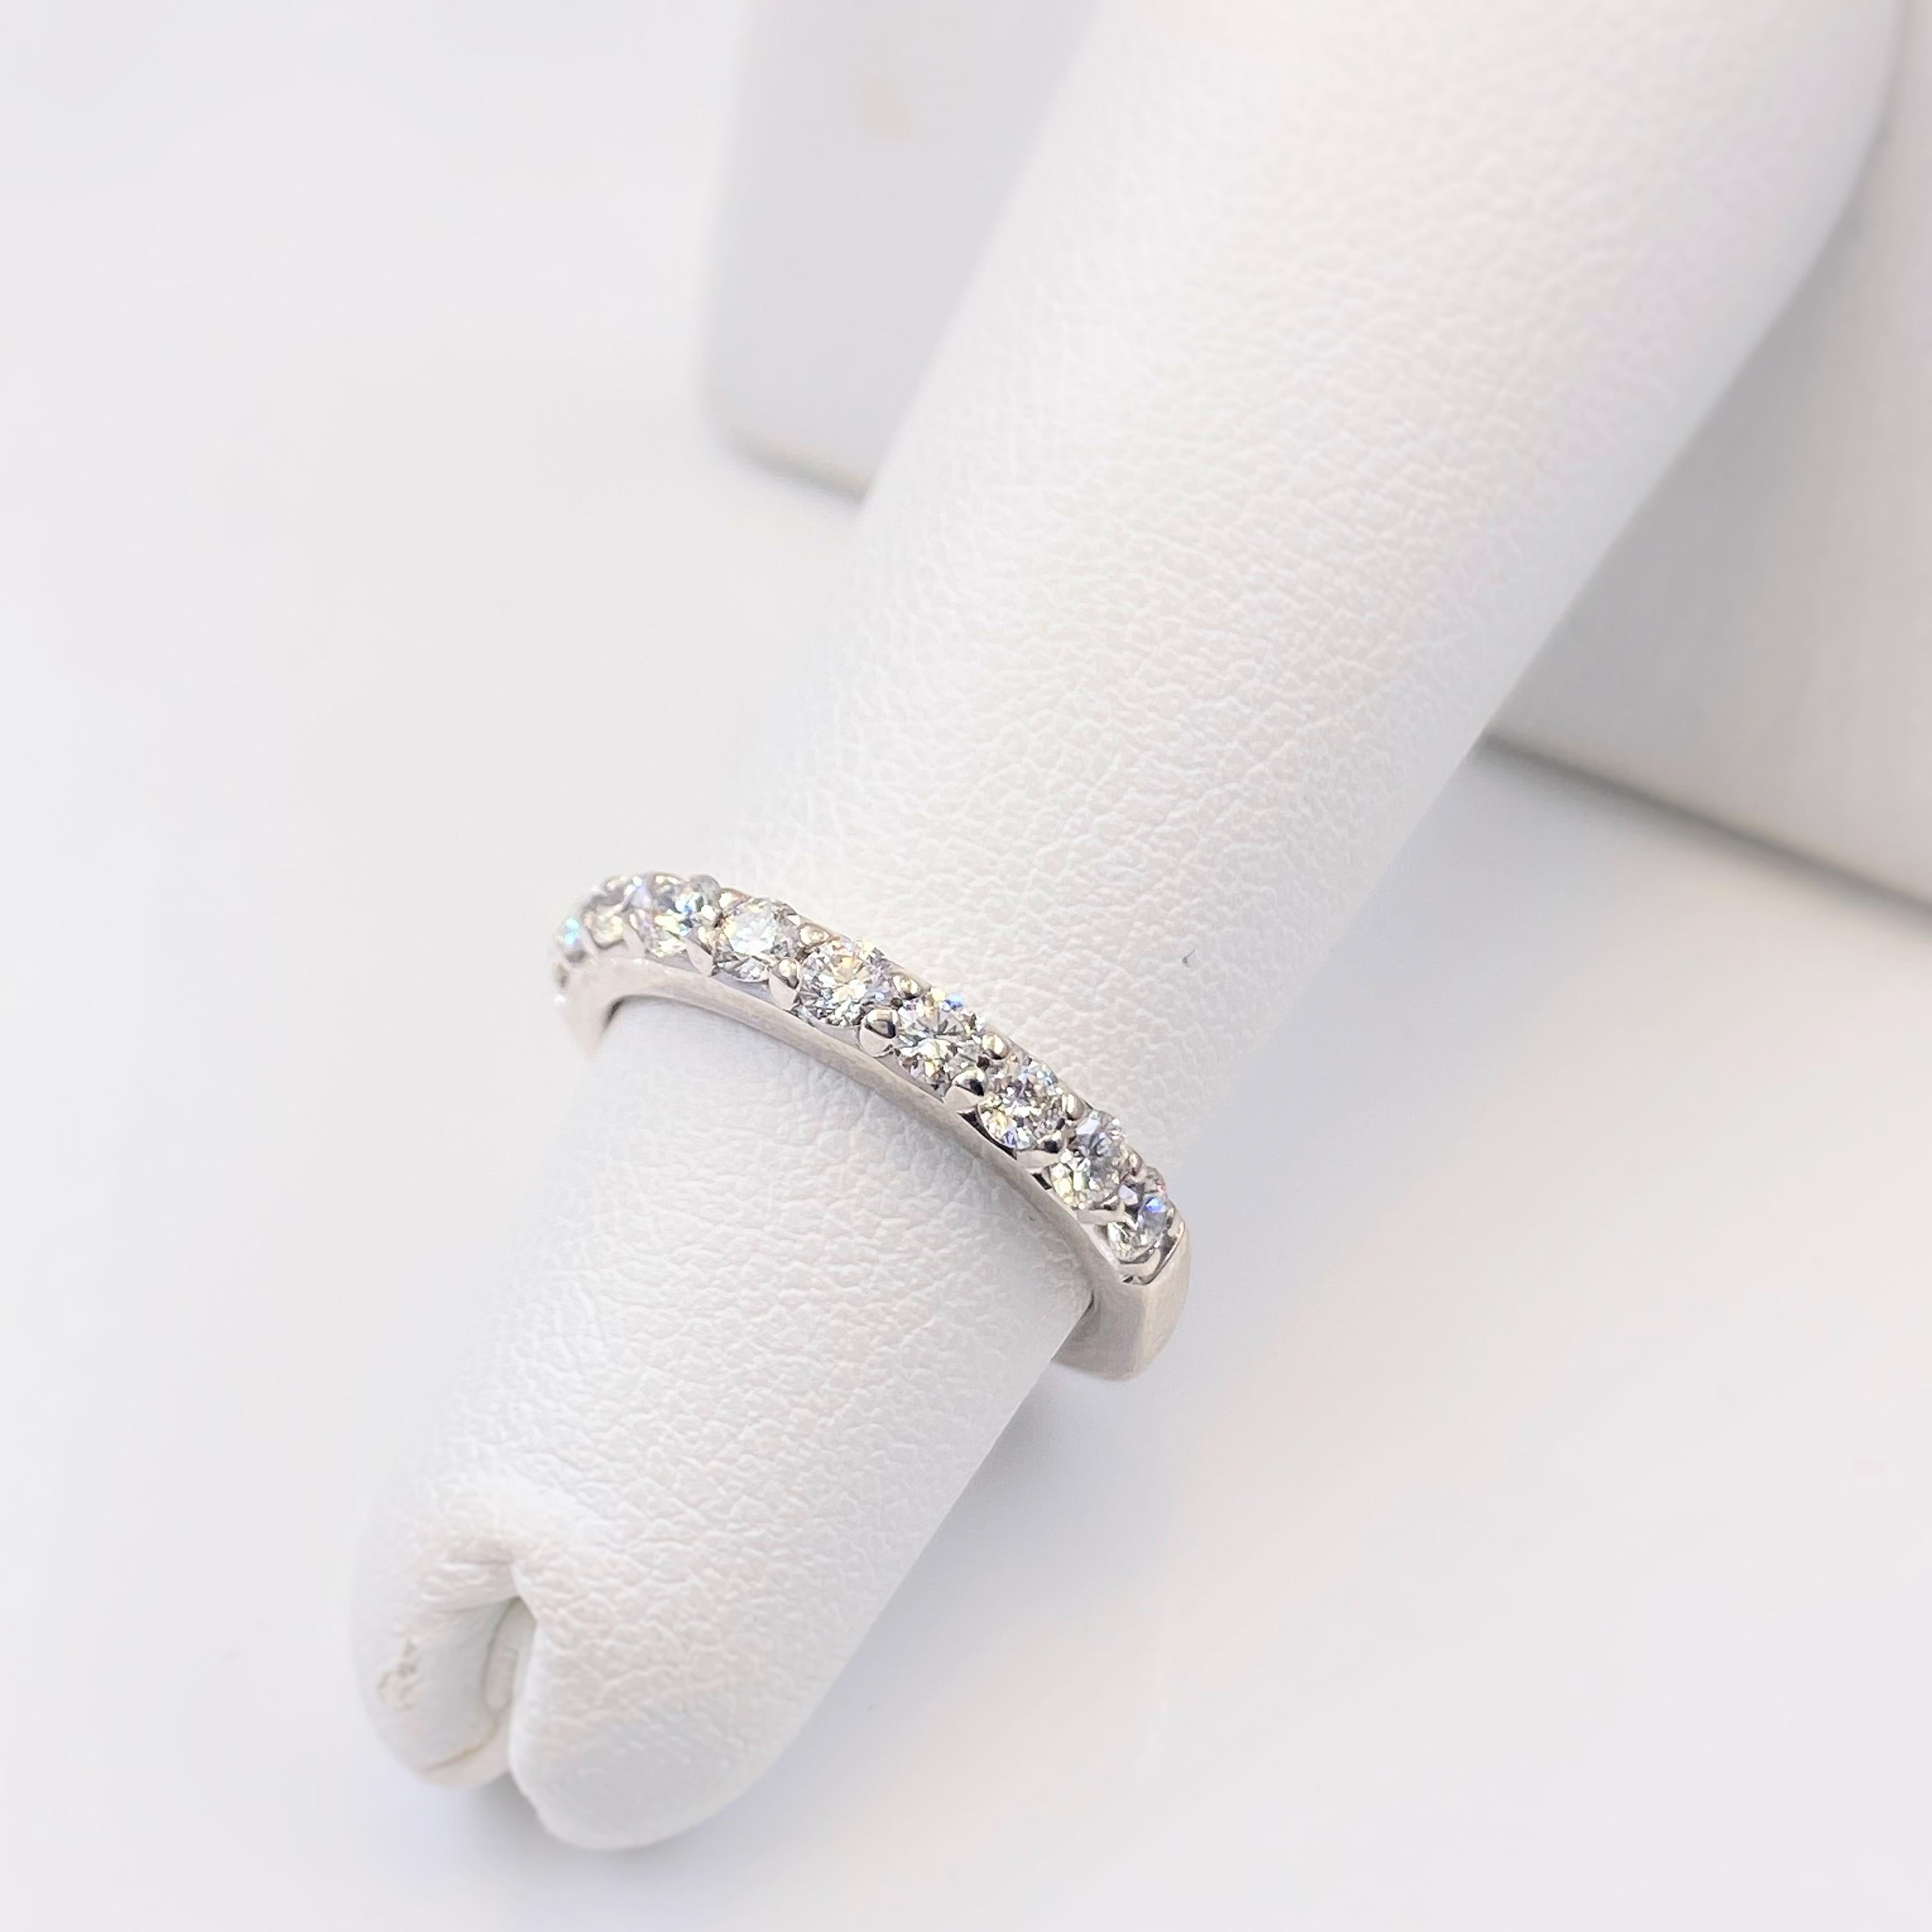 A. JAFFE Diamond Wedding Band
Style:  Prong Set
Metal:  18kt White Gold
Ref. #:  MRS868 
Size:  3.25
Width:  2.5 MM
TCW:  0.45 tcw
Diamond:  10 Round Brilliant Diamonds
Color & Clarity:  G - VS
Hallmark:  ©18KT A.JAFFE
Includes:  Elegant Ring